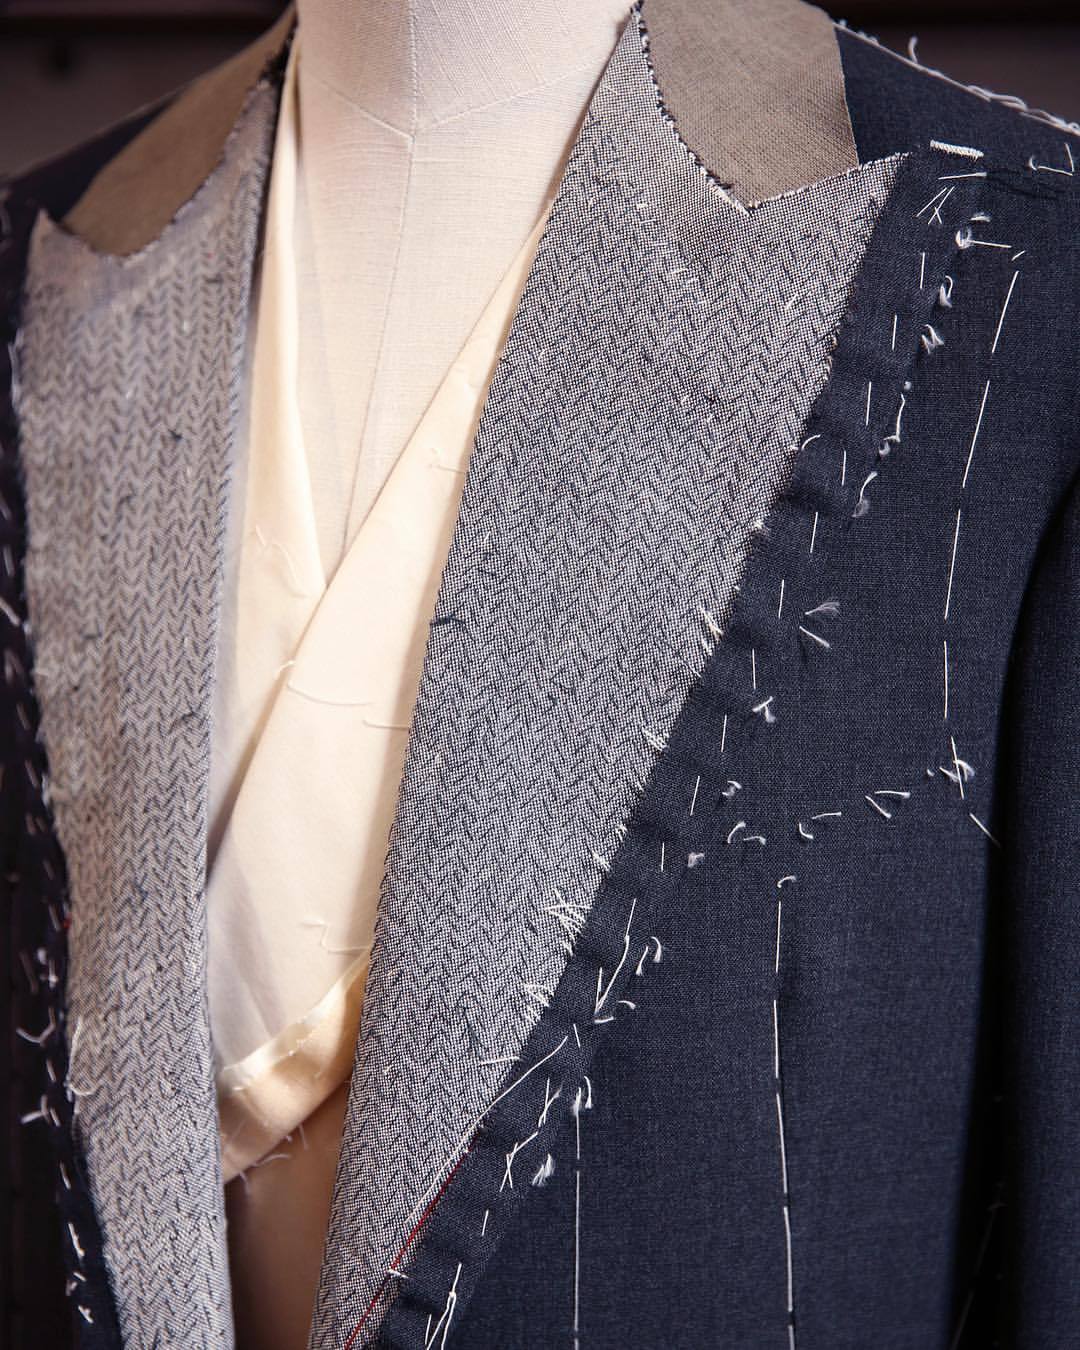 Shibumi handmade ties & accessories - made — Neat hand lapel on bespoke tailoring....